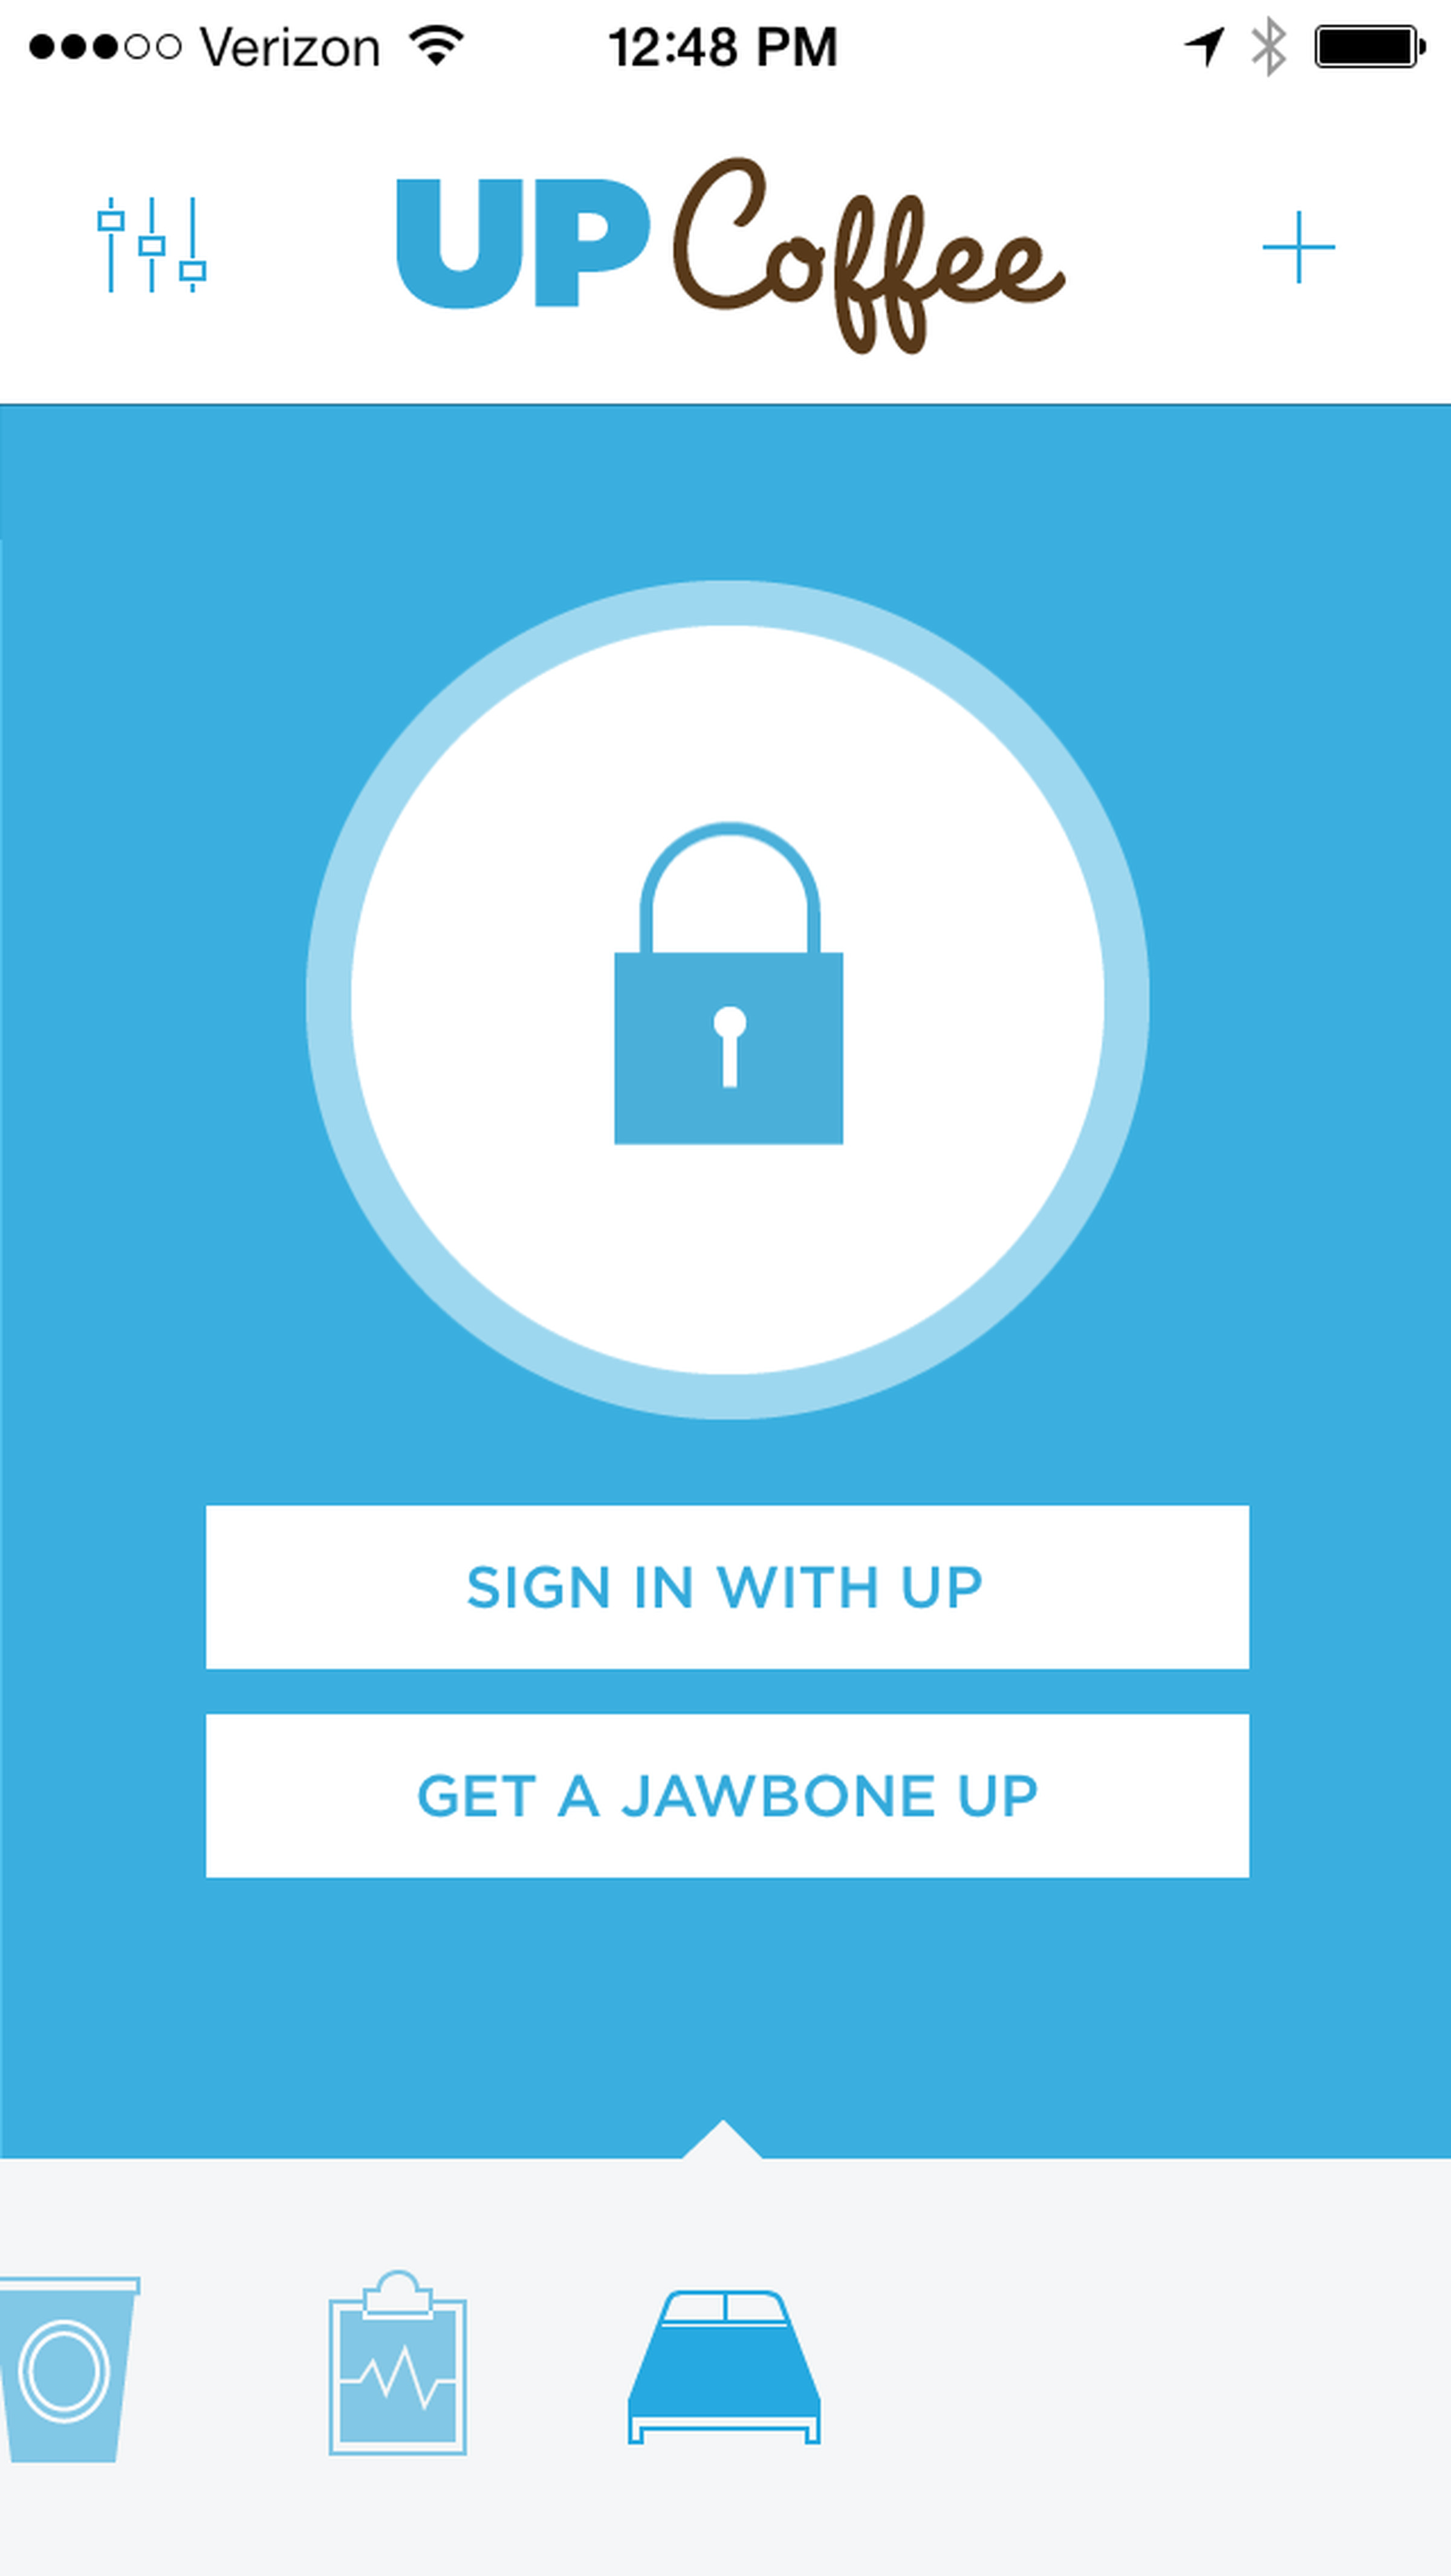 Jawbone's Up Coffee app